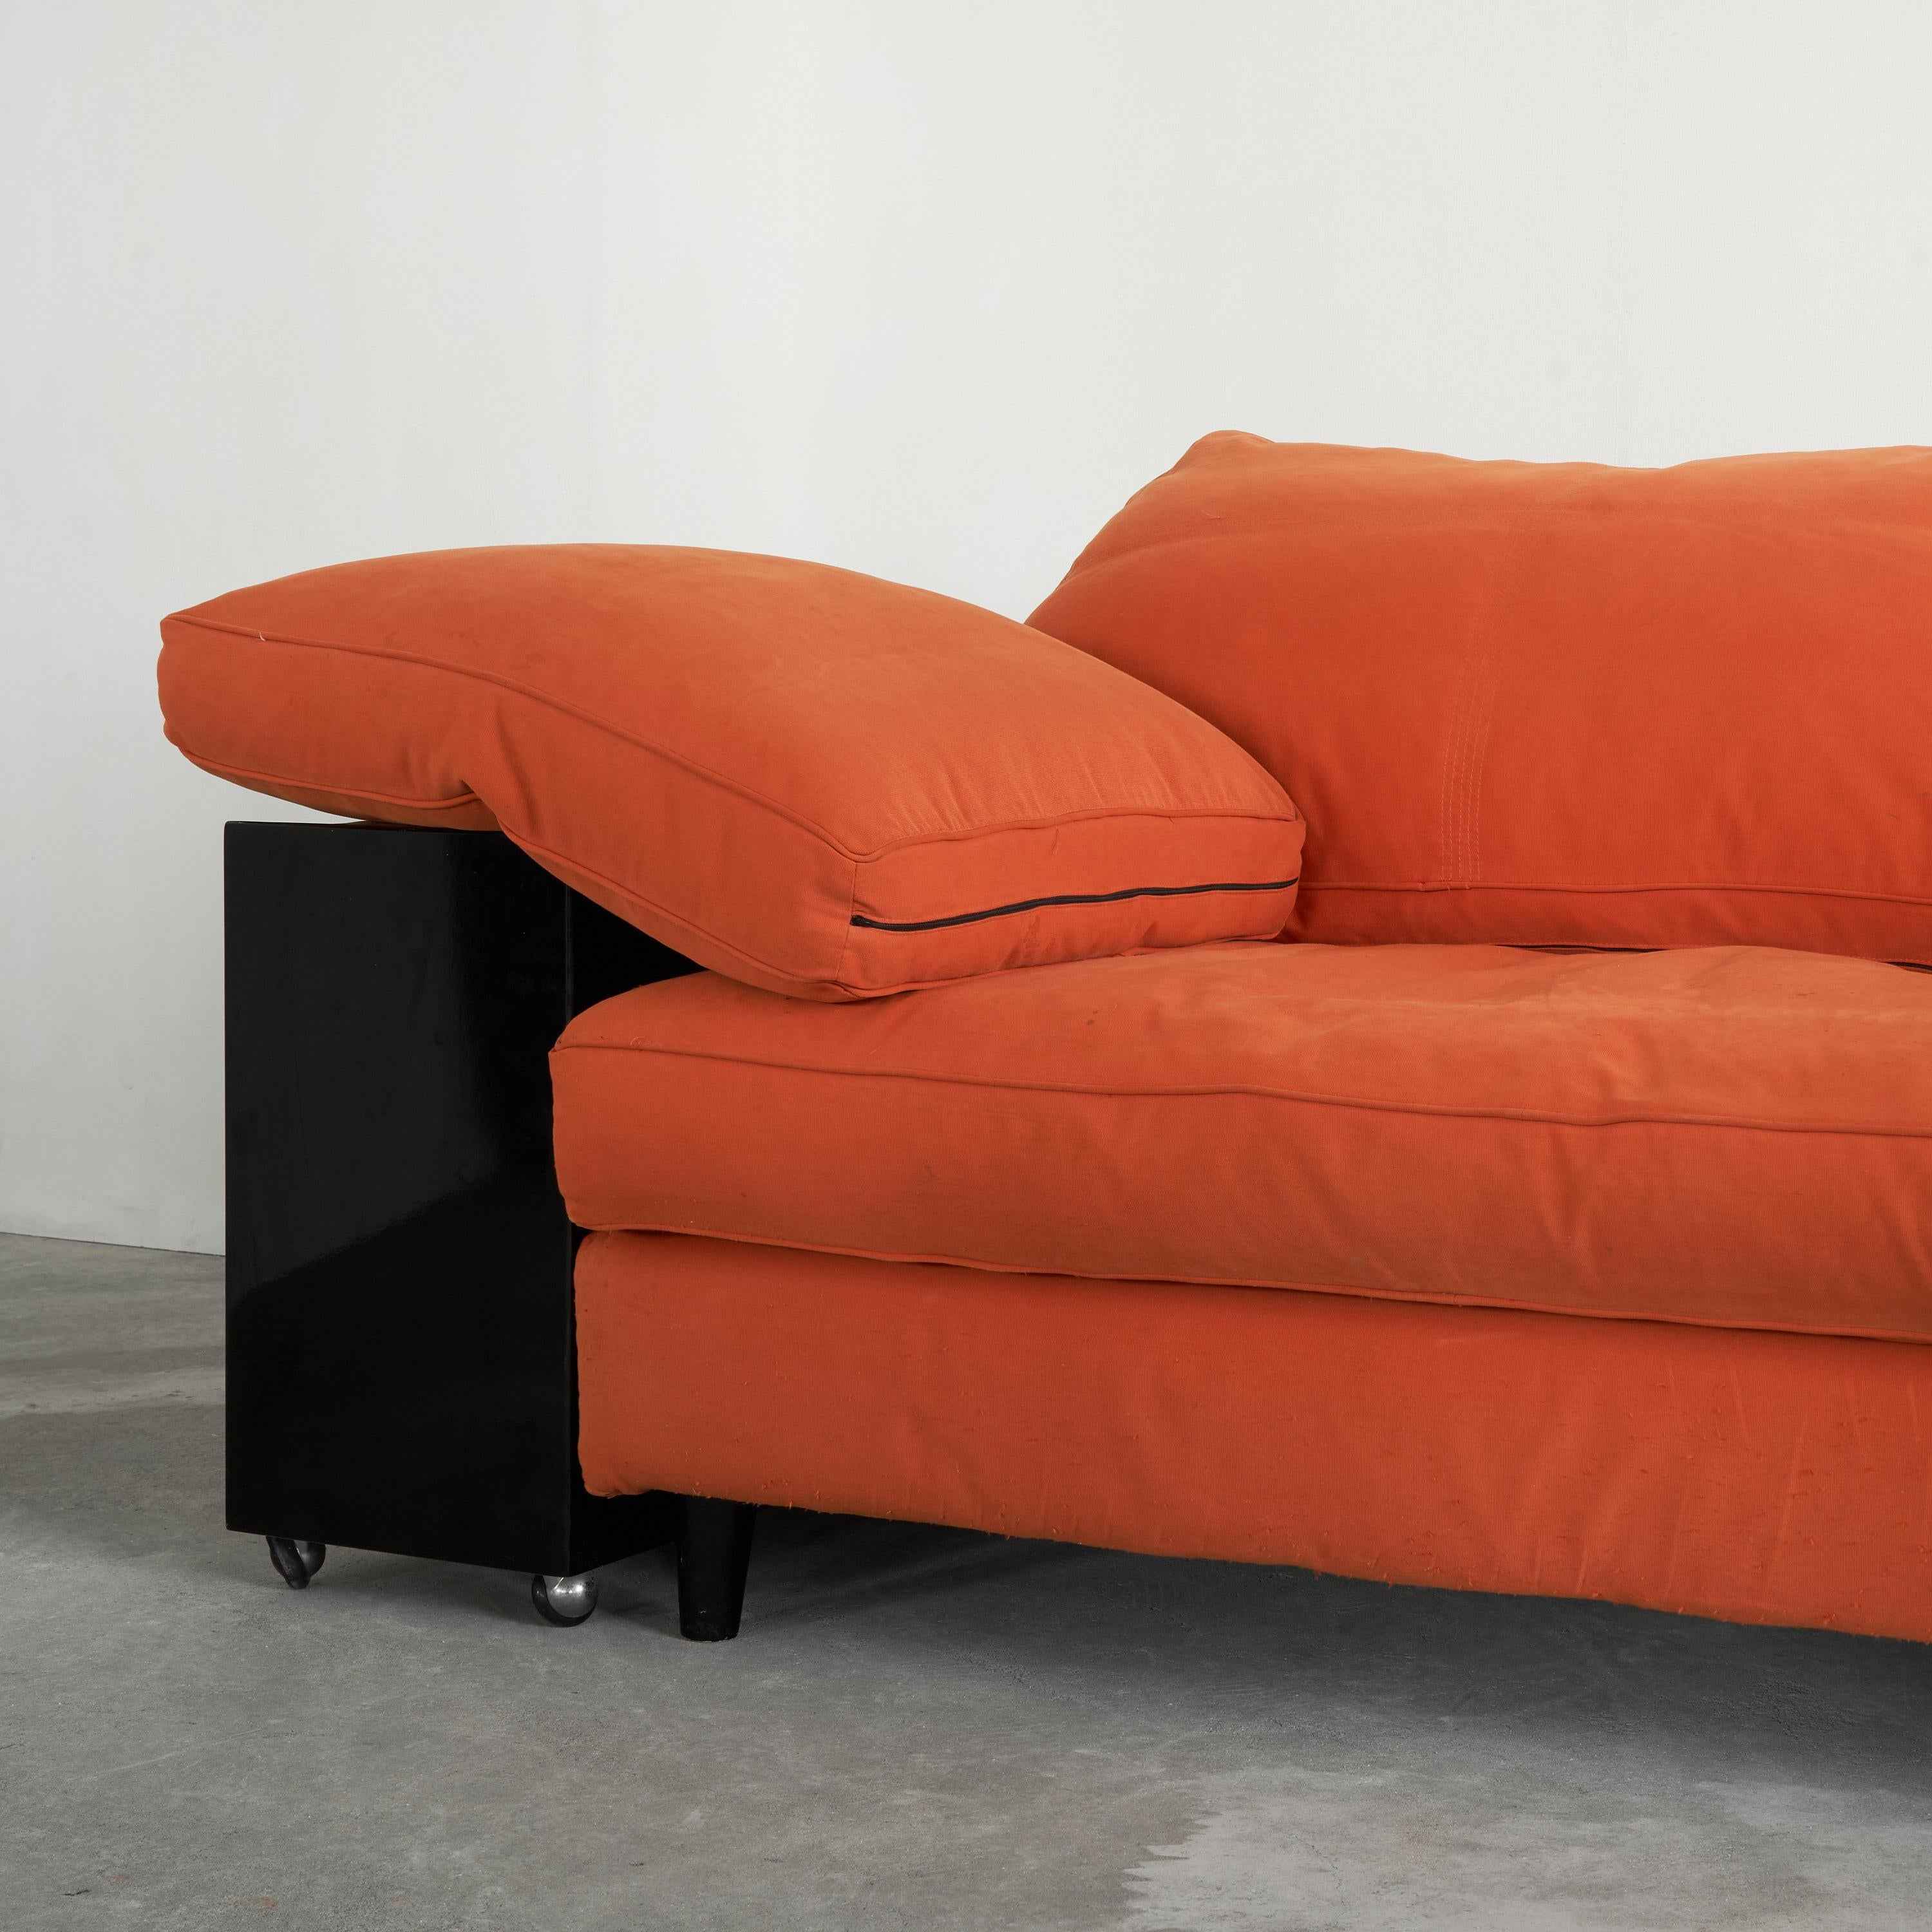 Art Deco Eileen Gray 'Lota' Sofa in Black Lacquer and Orange Fabric 1980s For Sale